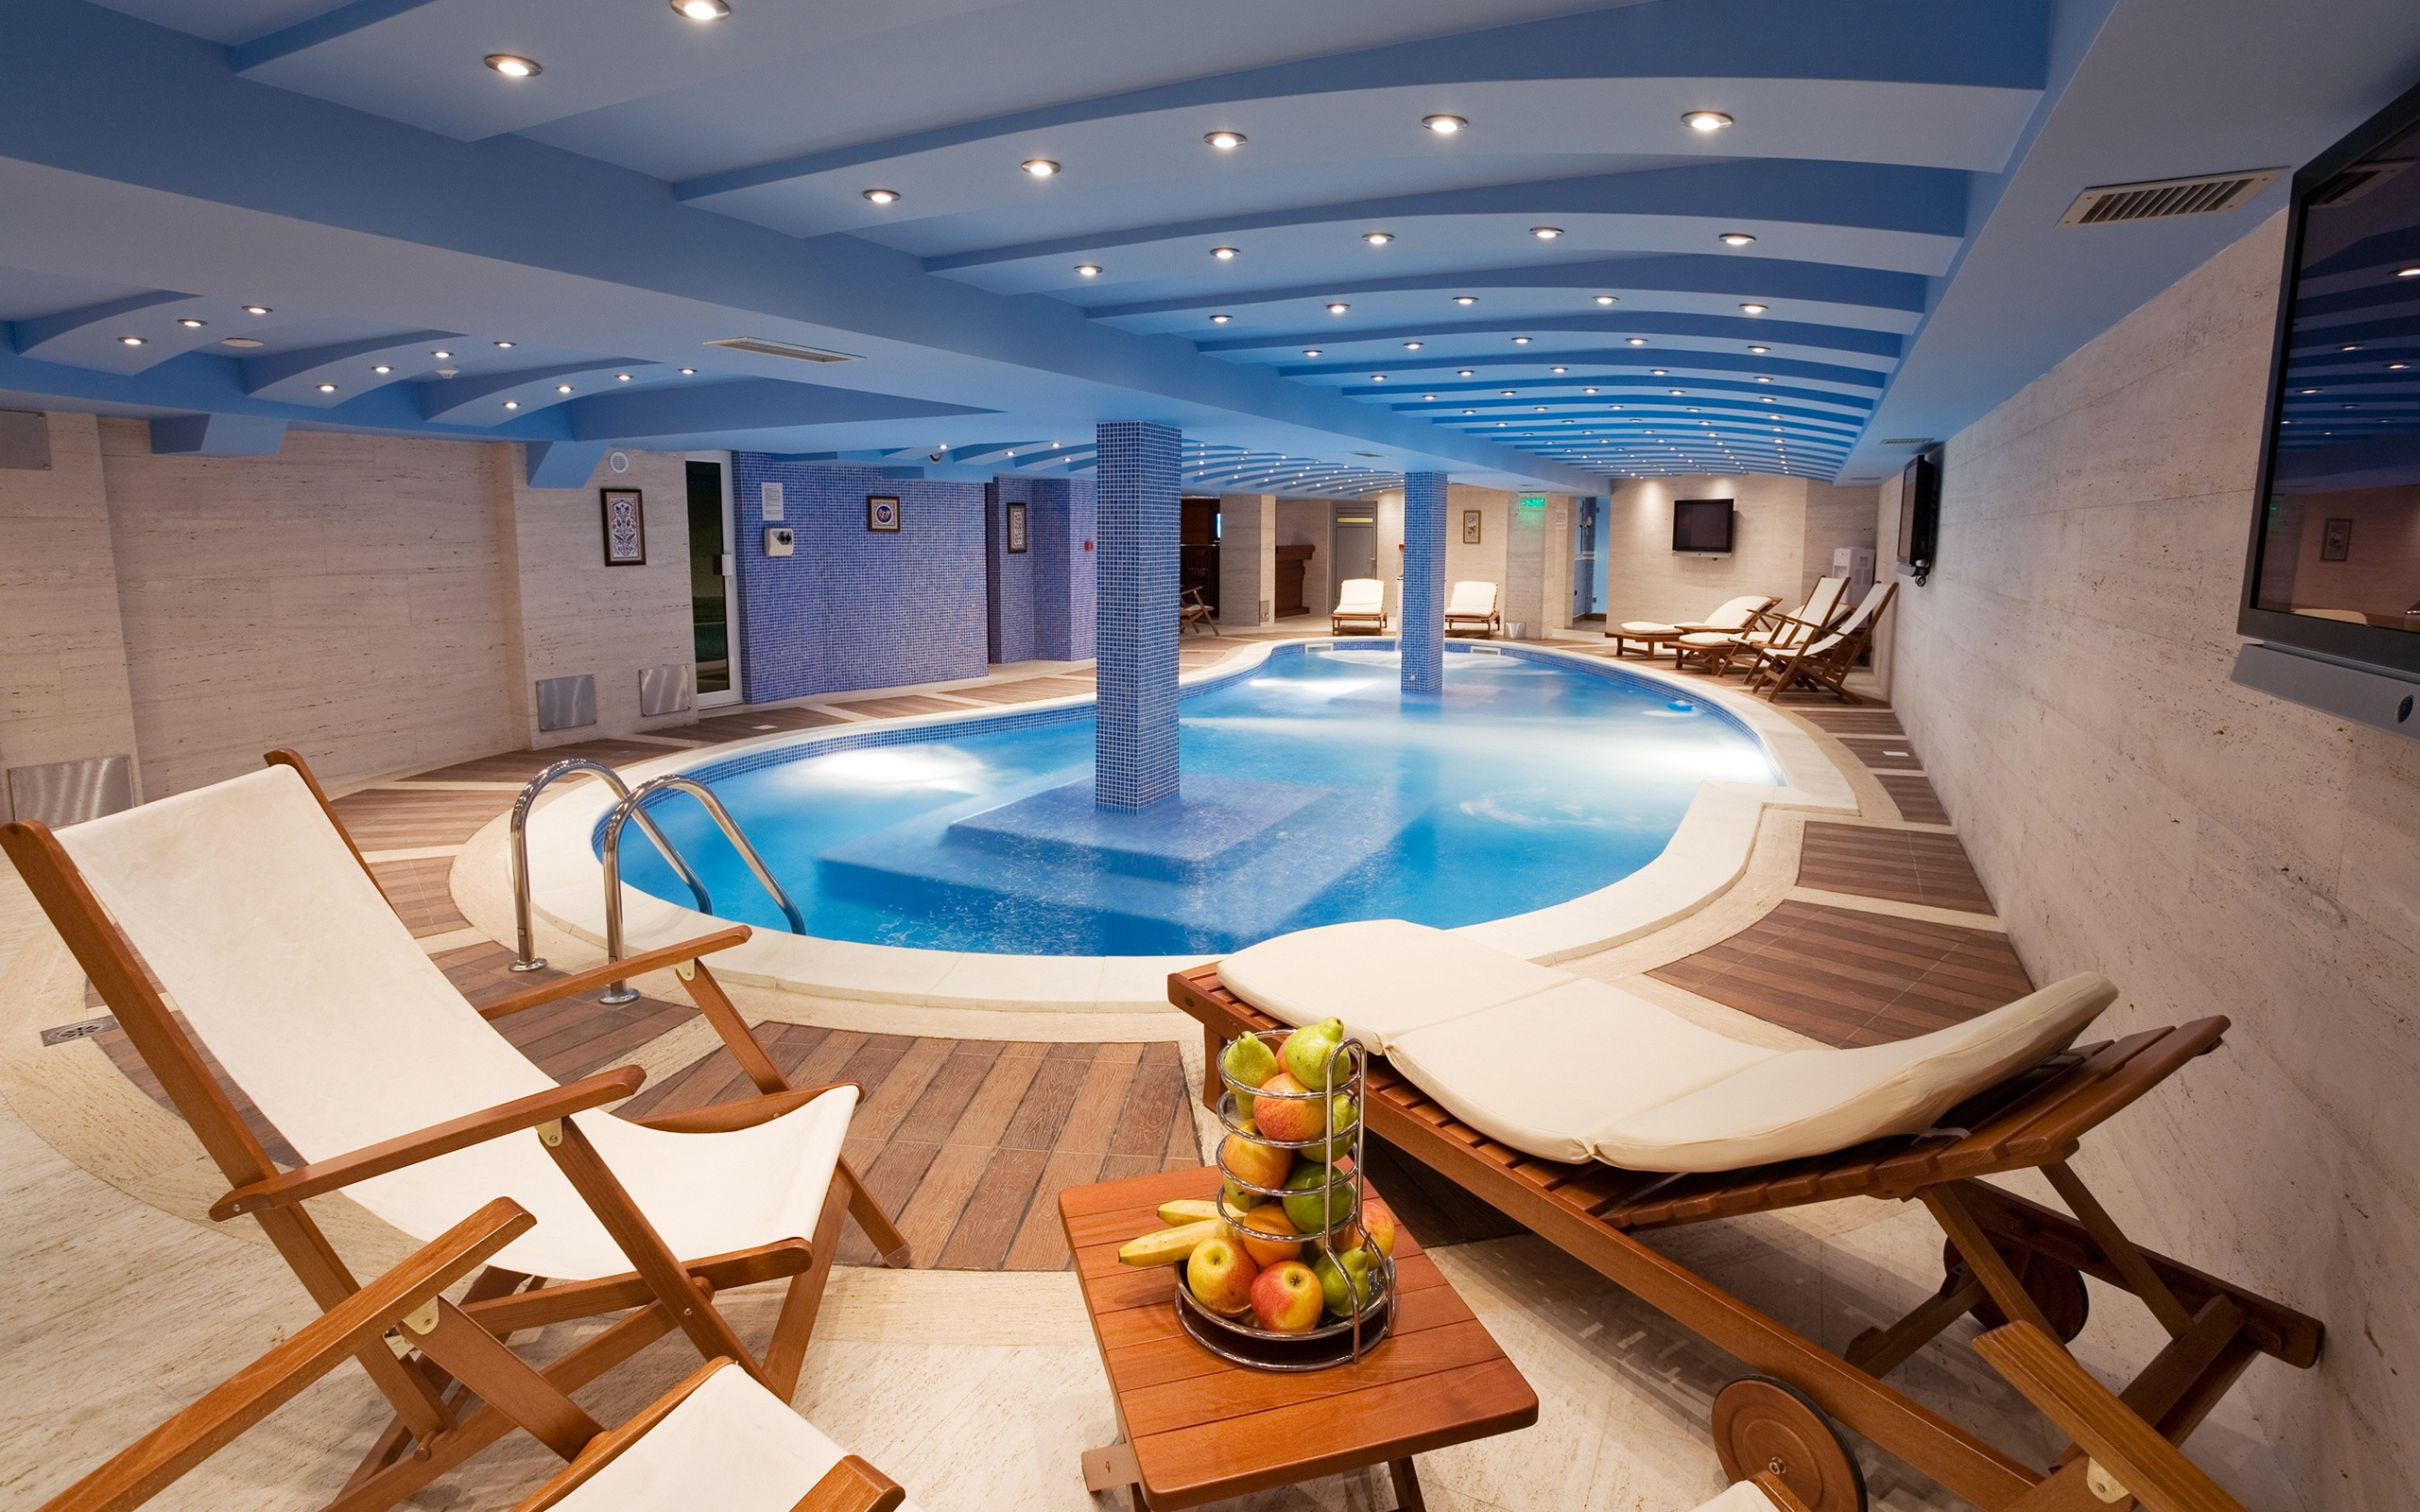 Hotel swimming pool